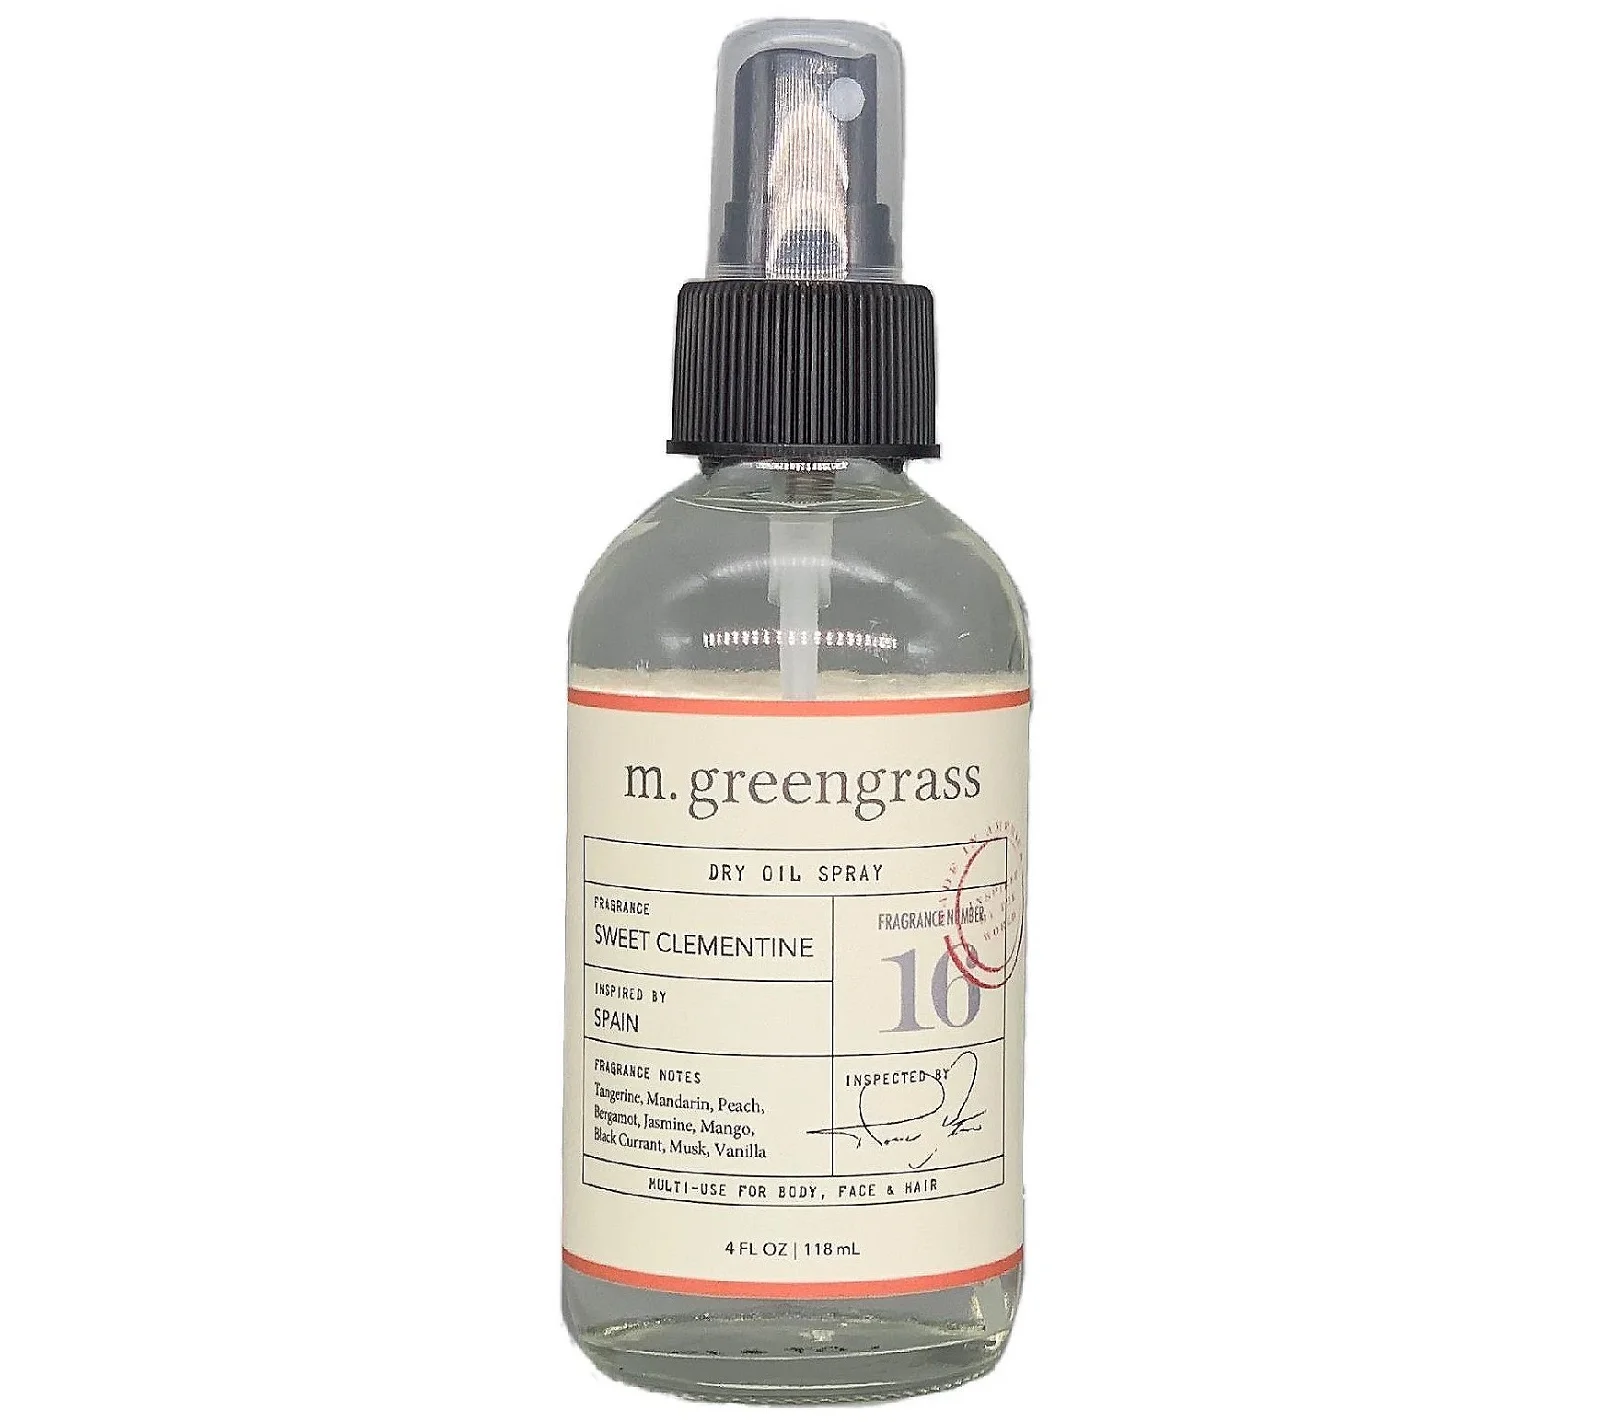 m.greengrass Sweet Clementine Dry Oil Spray